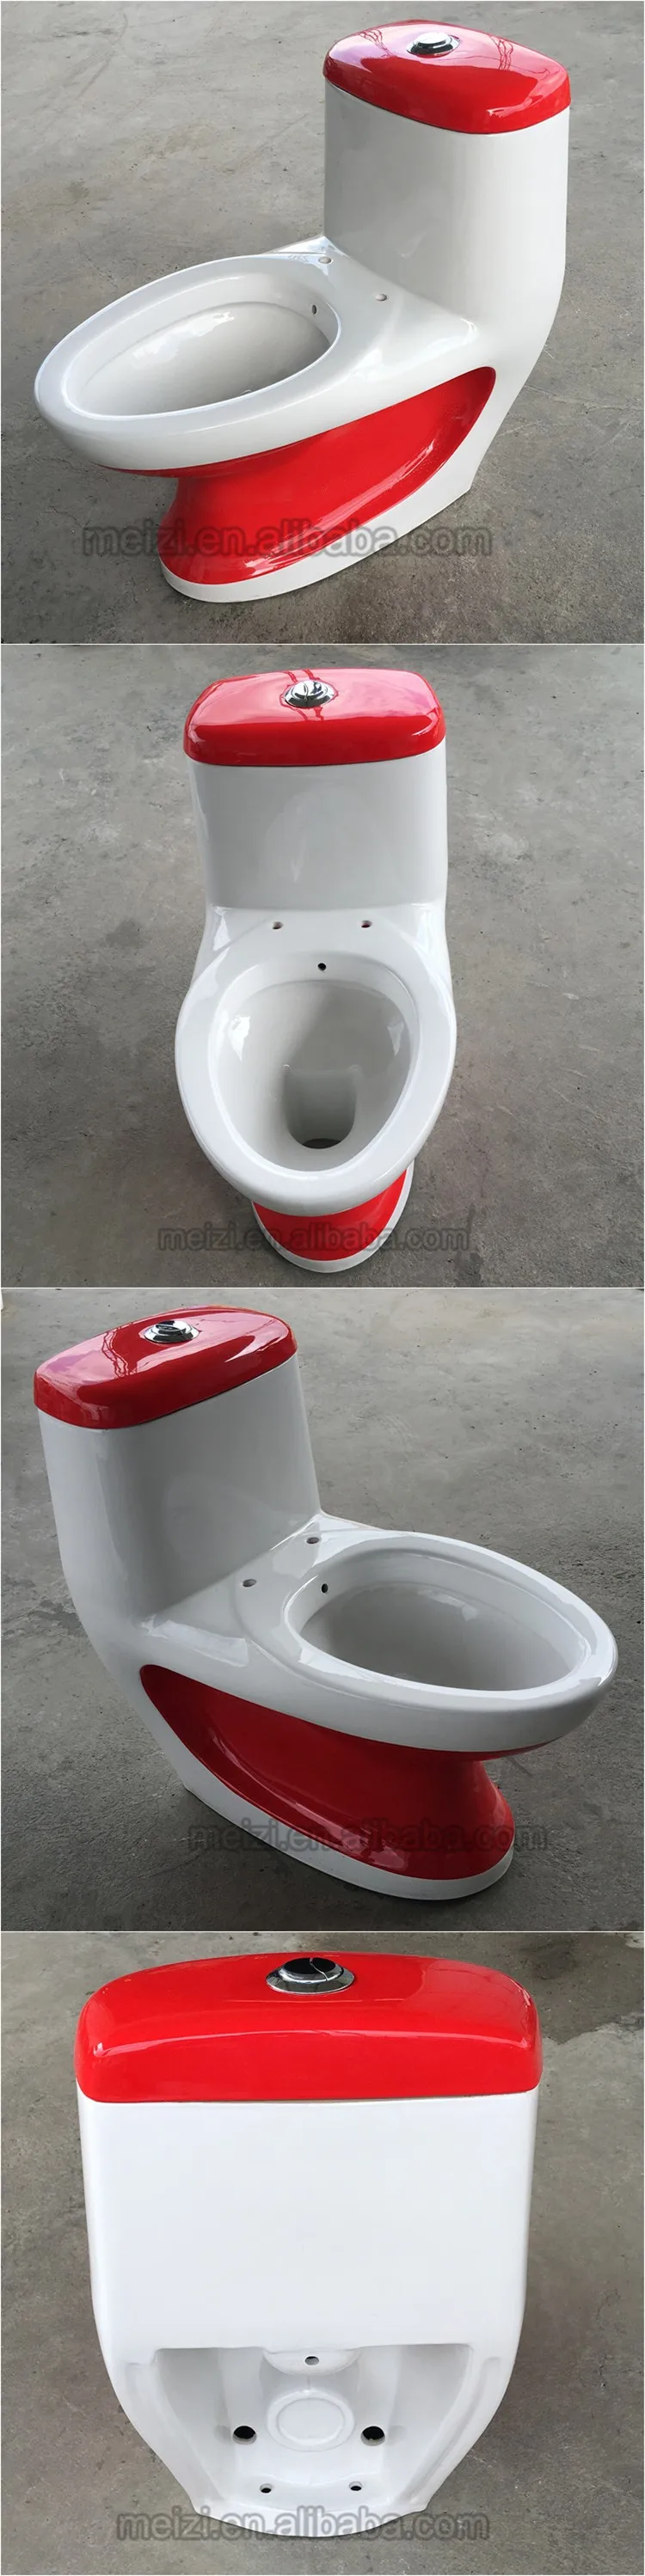 Ceramic sanitary ware one piece boat toilet